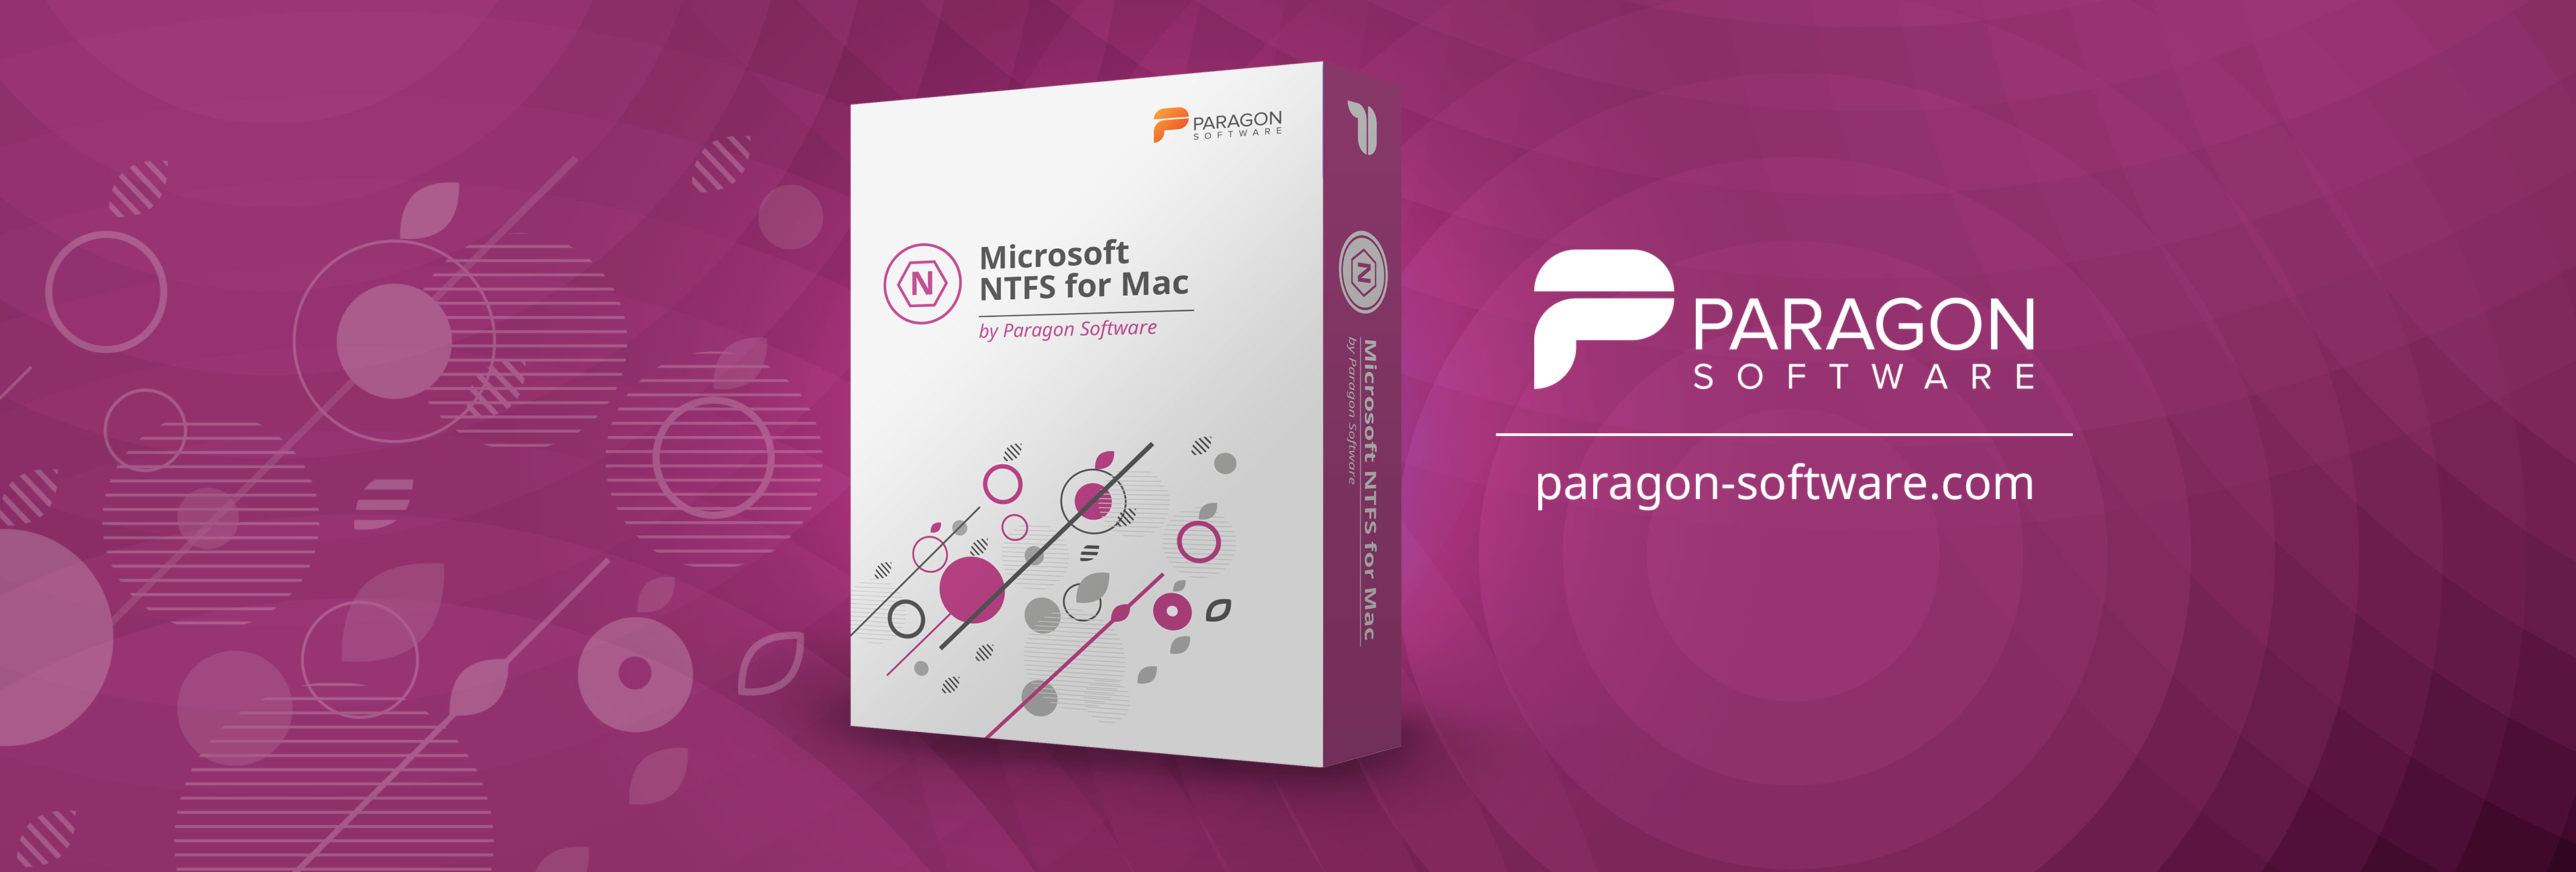 paragon microsoft ntfs for mac